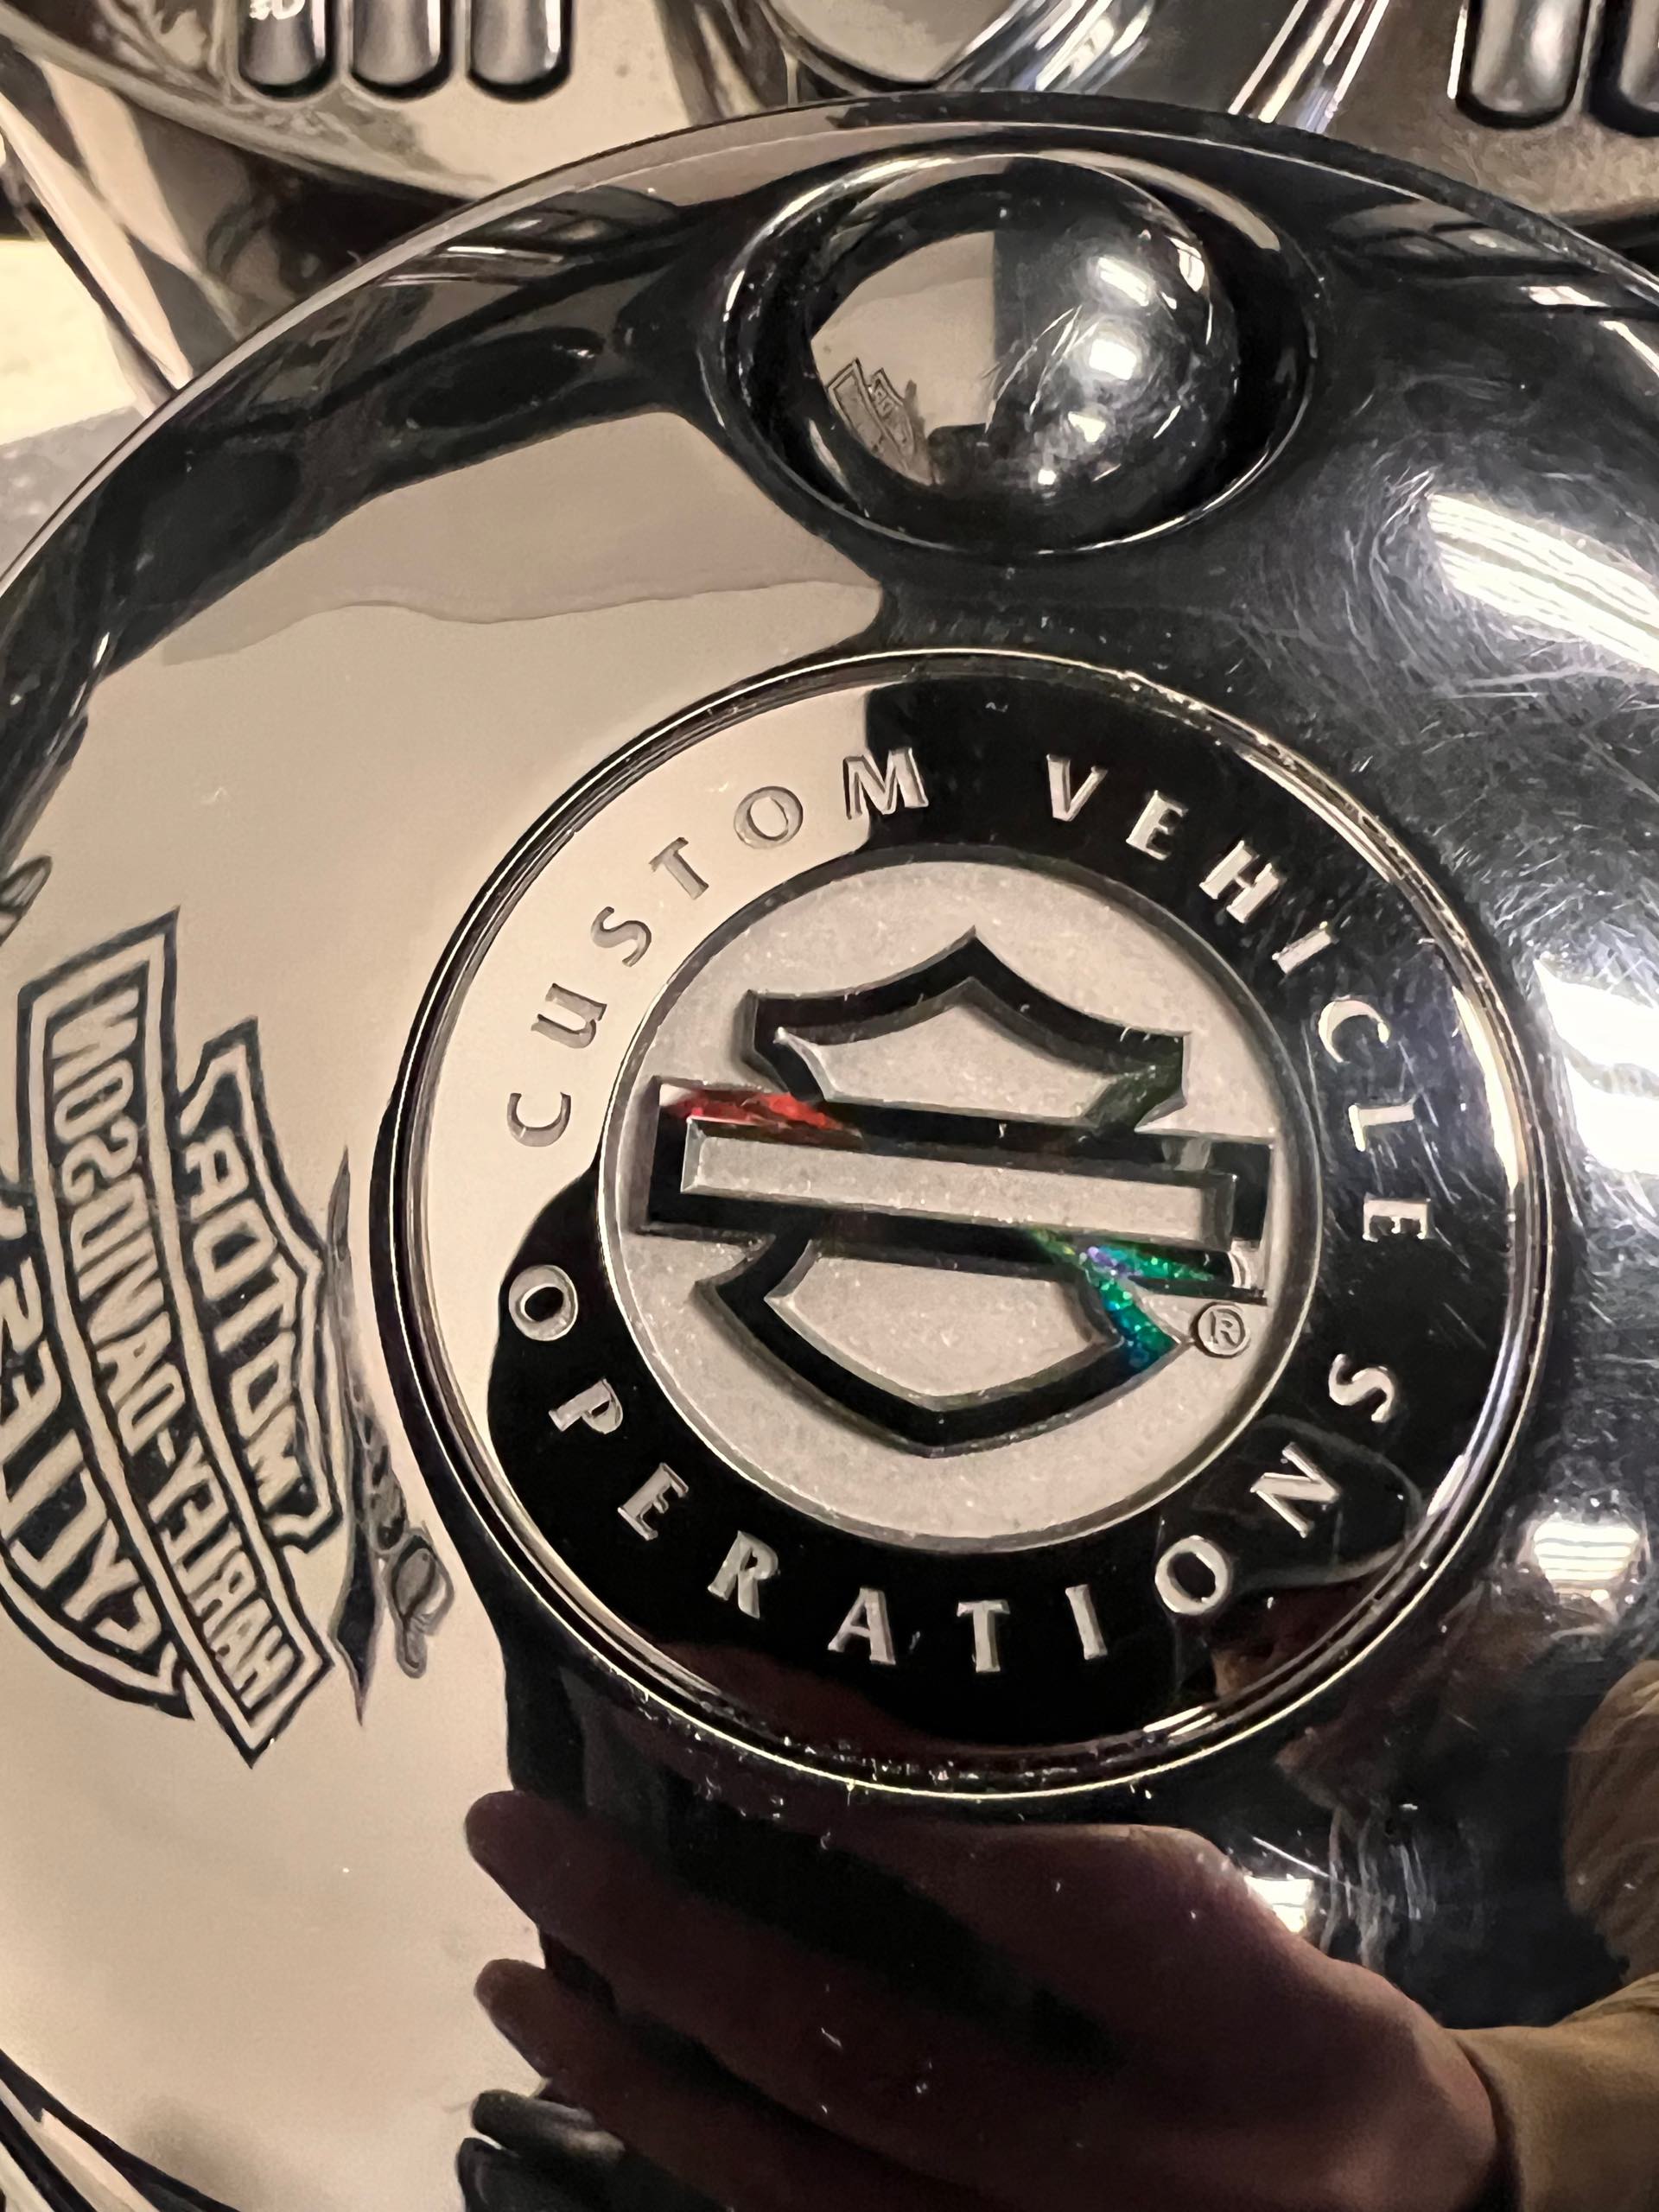 2018 Harley-Davidson Electra Glide CVO Limited at Deluxe Harley Davidson